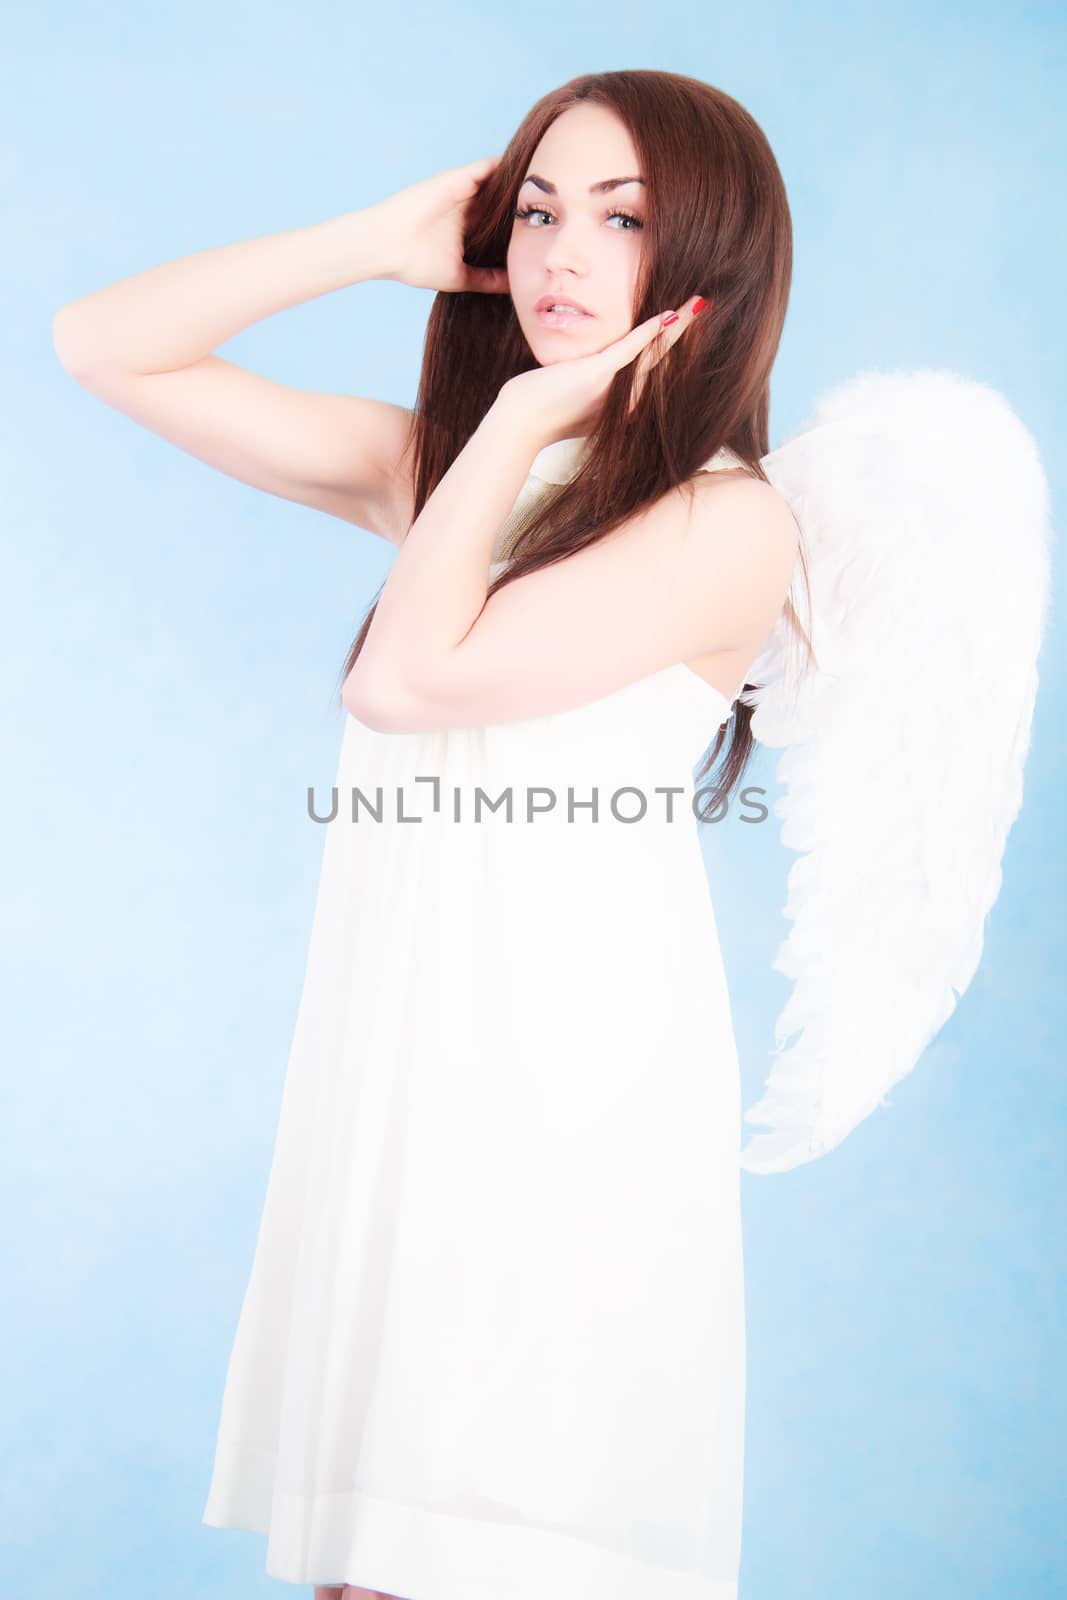 Beautiful young angel by Artzzz